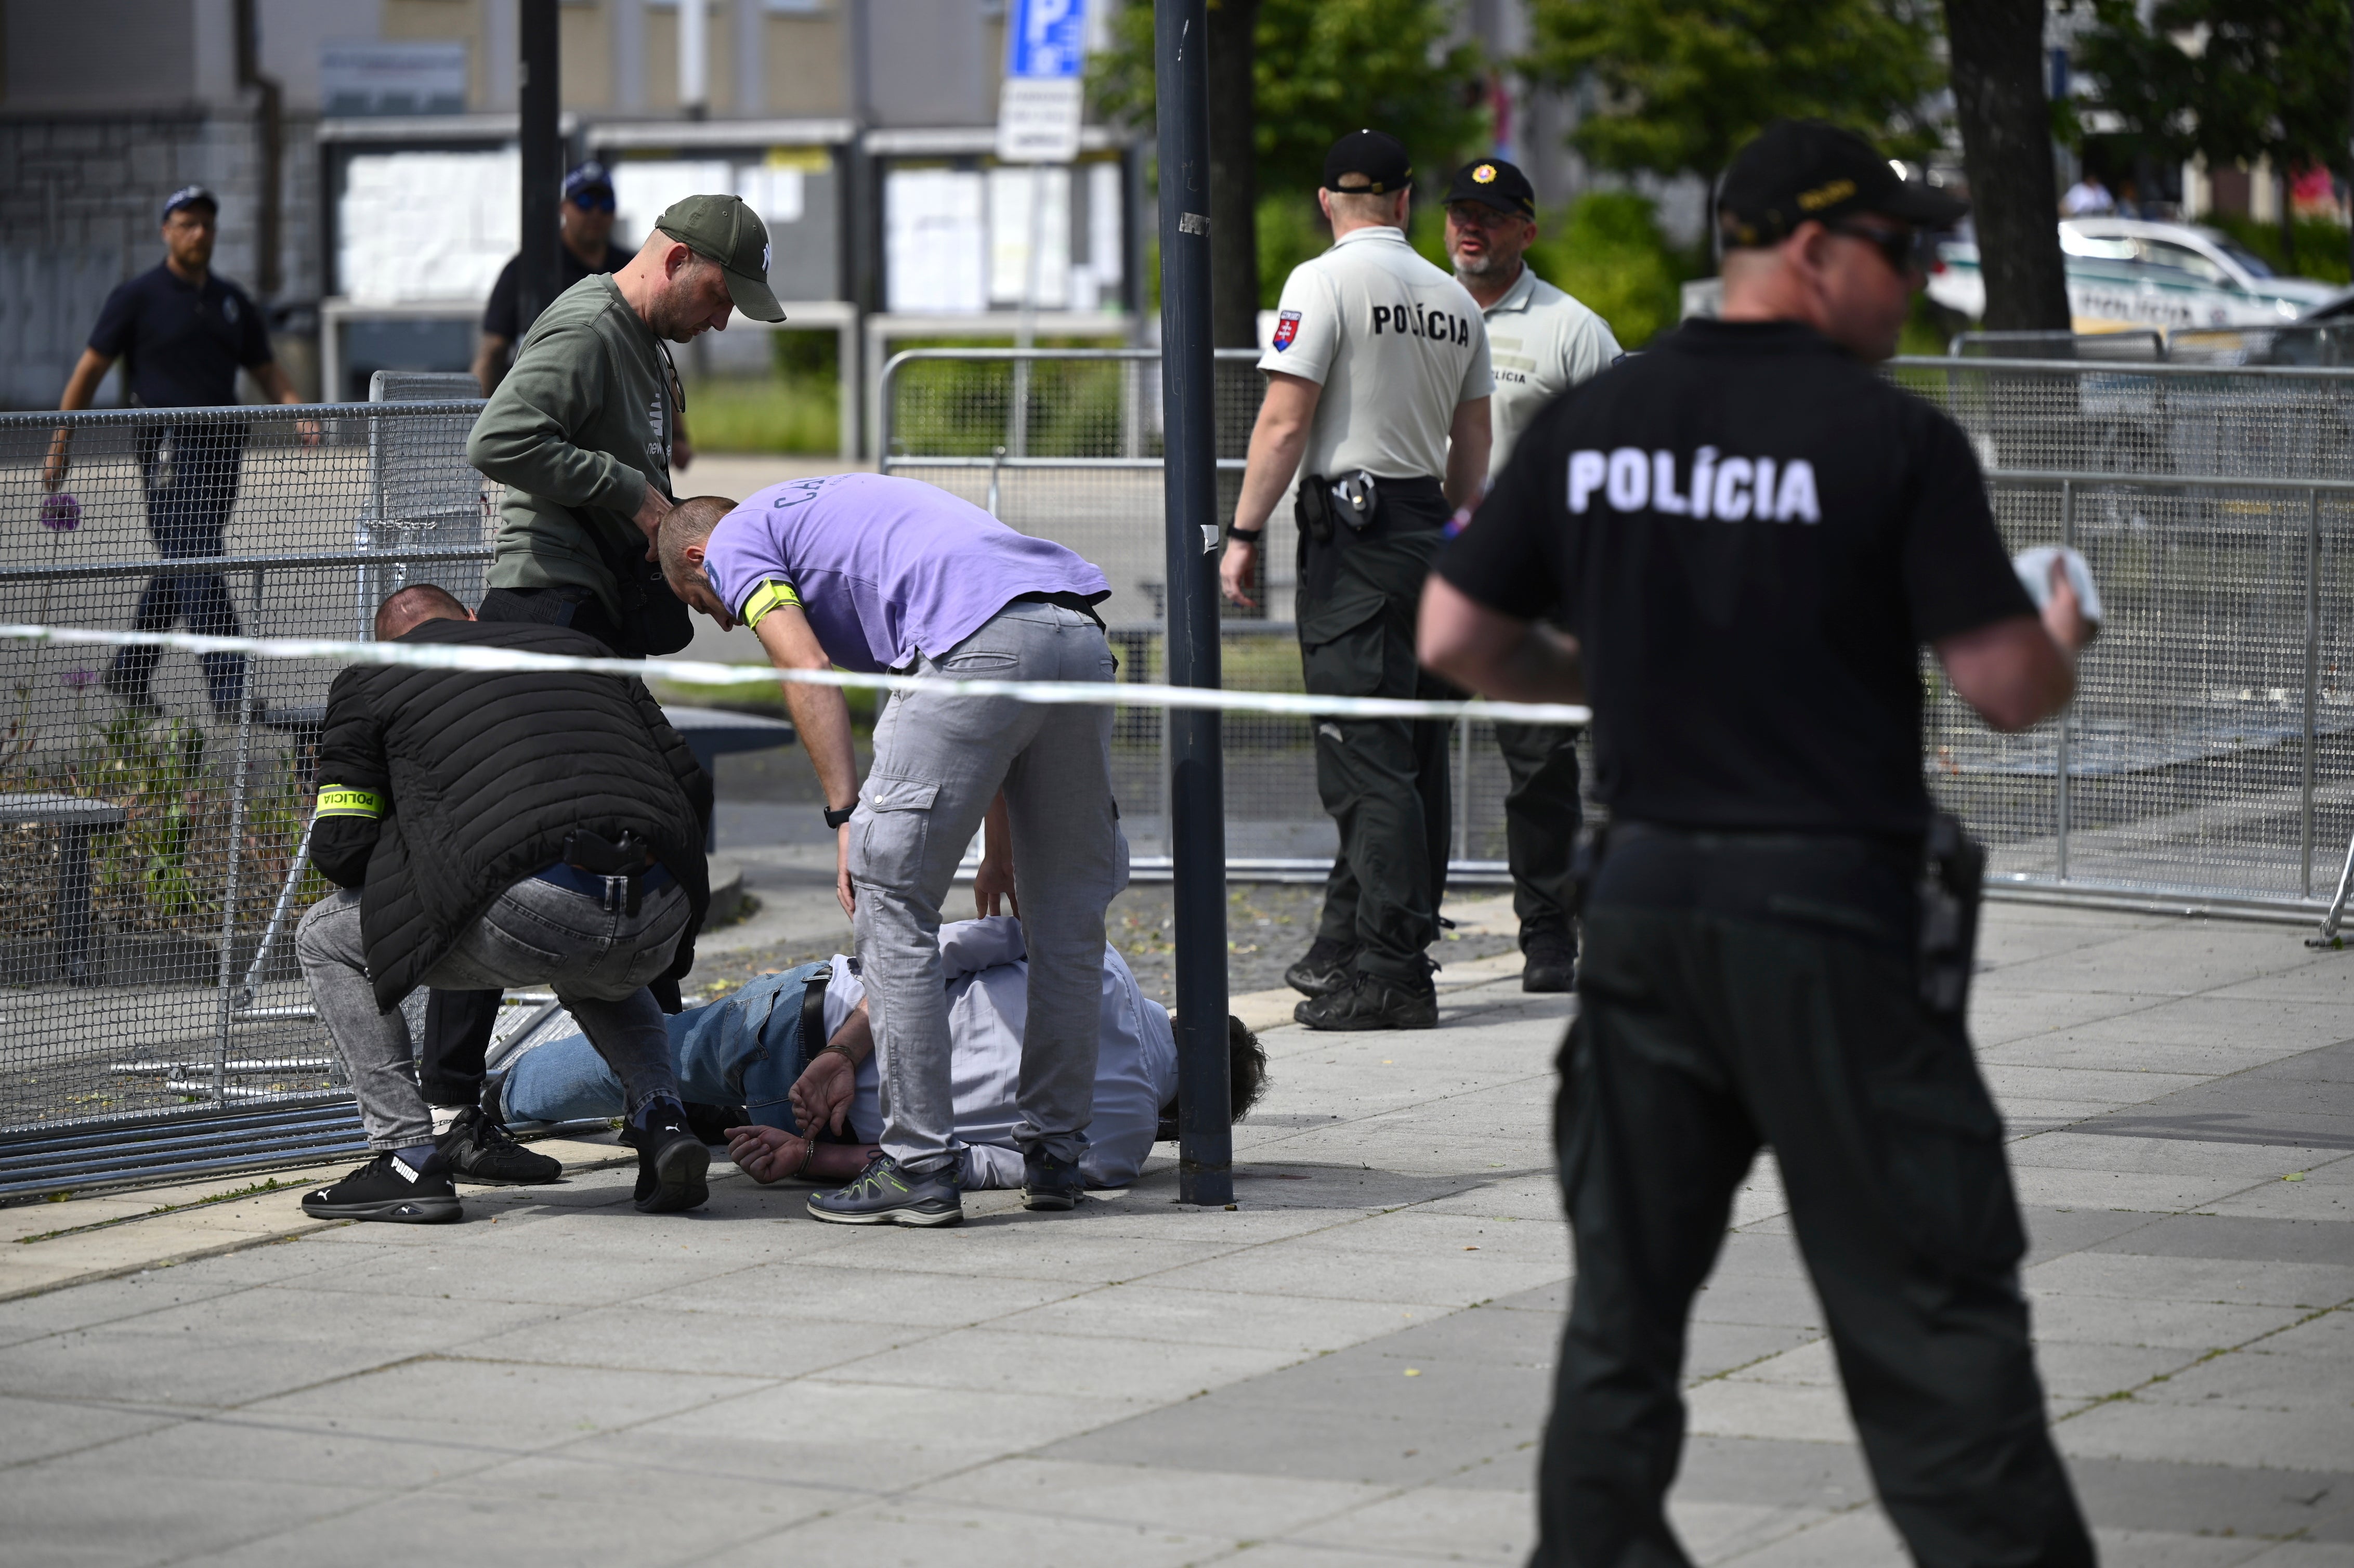 Police arrest a man after Slovak Prime Minister Robert Fico was shot and injured